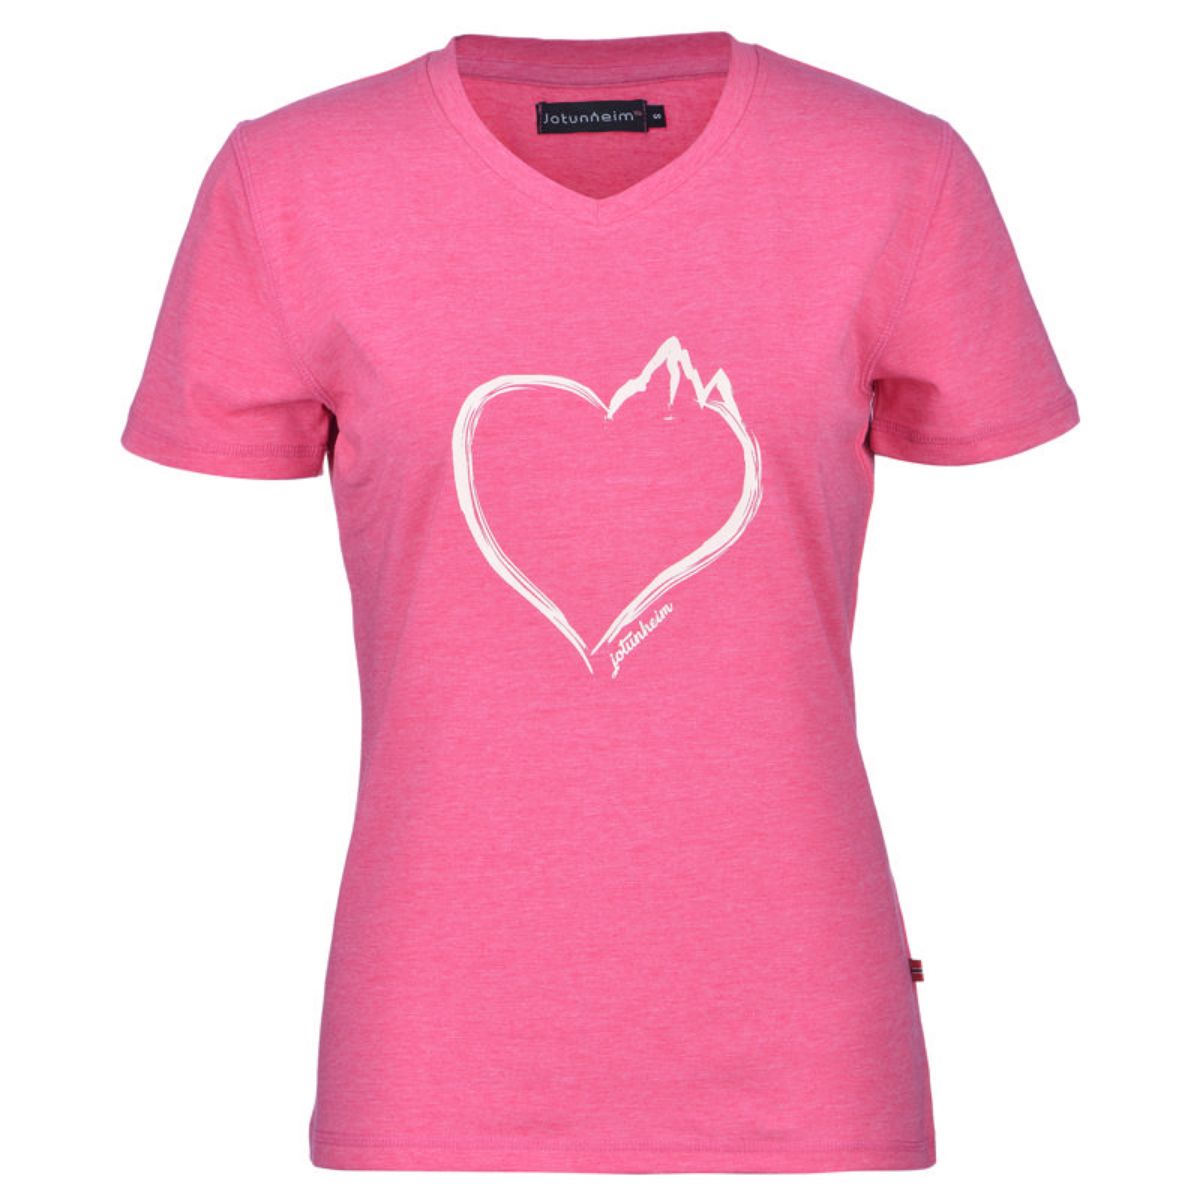 jotunheim-varde-t-shirt-m-print-dame-jotunheimraspberry-sorbet